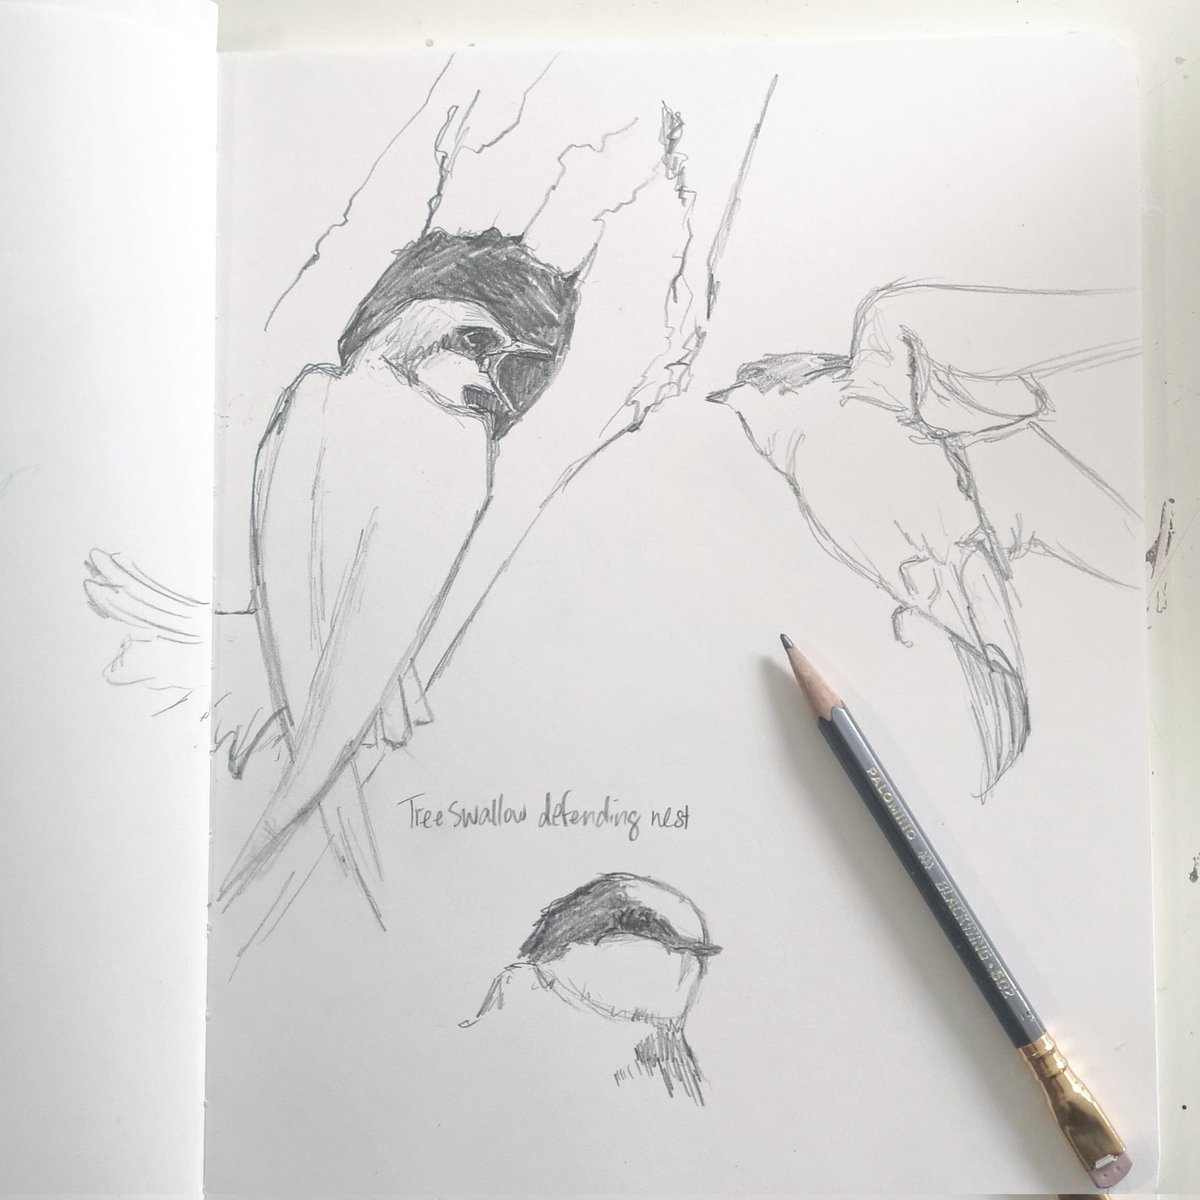 Tree Swallow sketches

#artjournal #naturejournal #sketchbook #stillmanandbirn #birds #swallows #drawing #artist